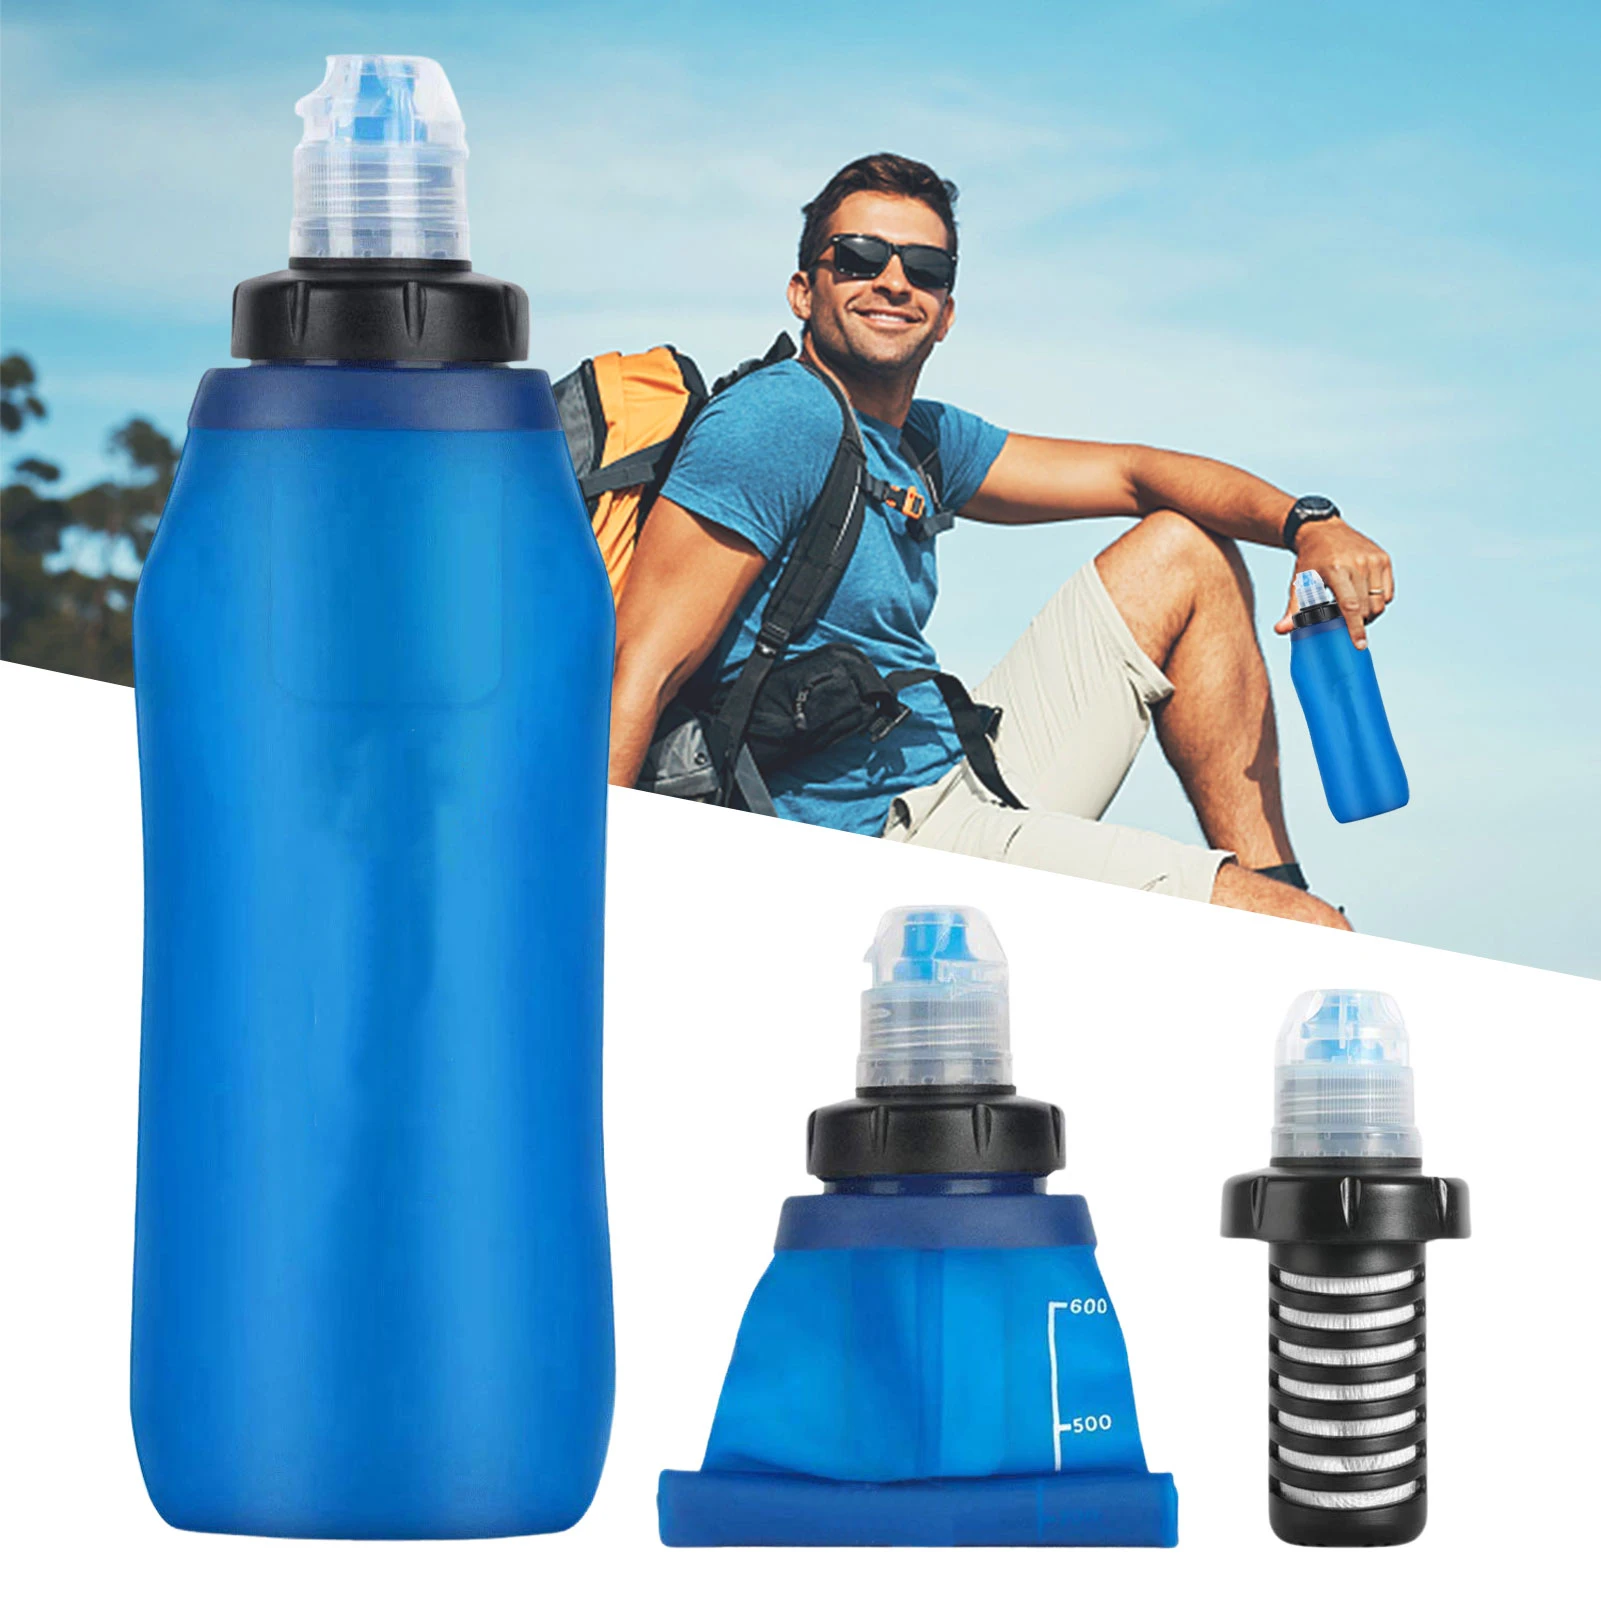 Refinar beneficio Tom Audreath Botella de filtro de agua, botellas, filtros, filtro de agua portátil para  Camping, senderismo, supervivencia de emergencia, purificador de agua,  suministros al aire libre|Botellas de deporte| - AliExpress